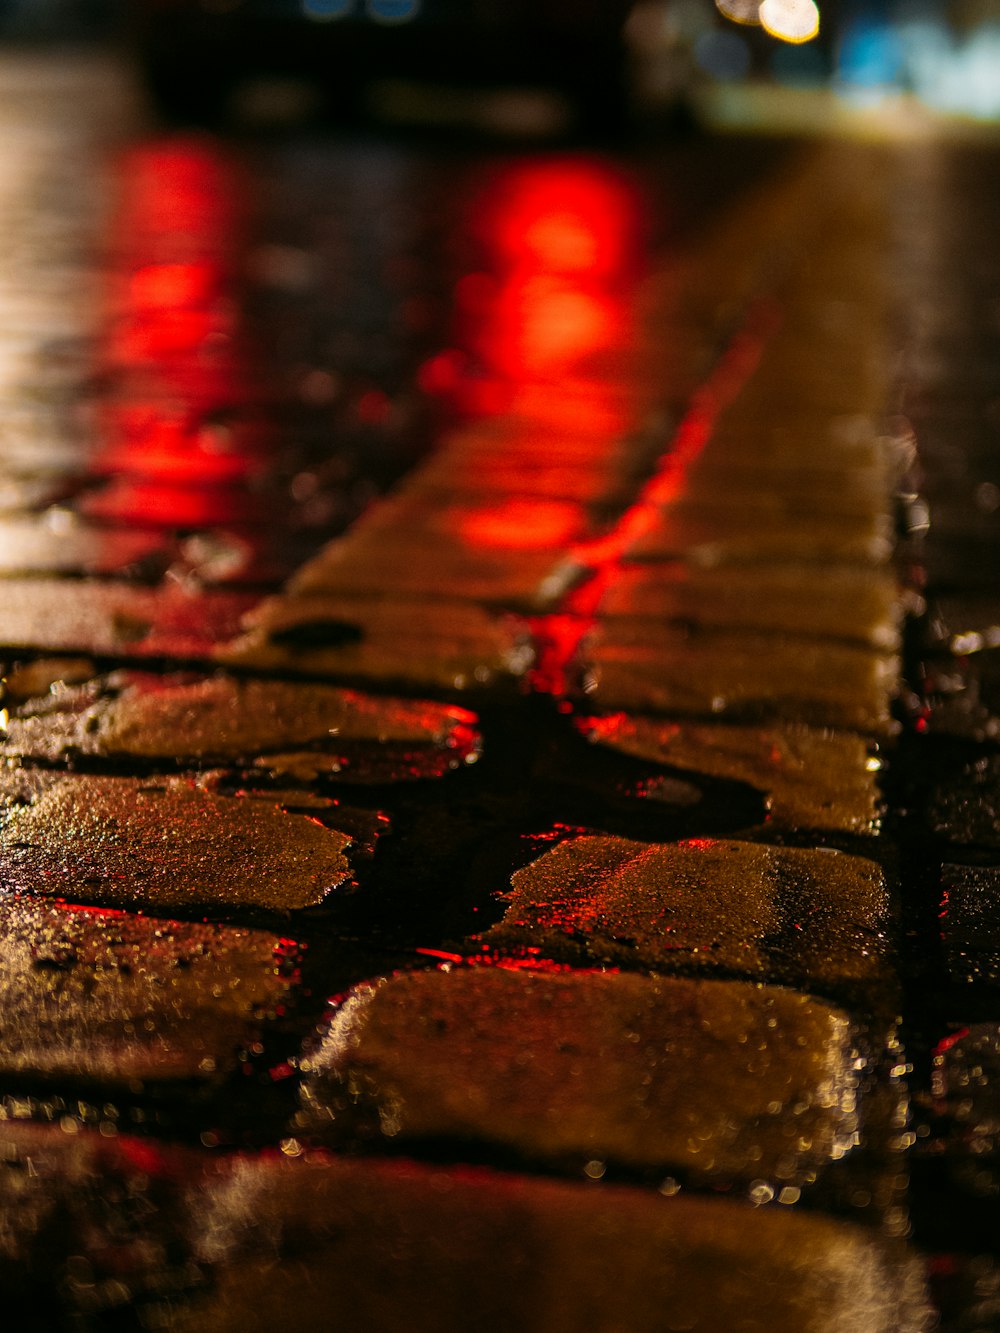 red and black concrete floor photo – Free Street Image on Unsplash